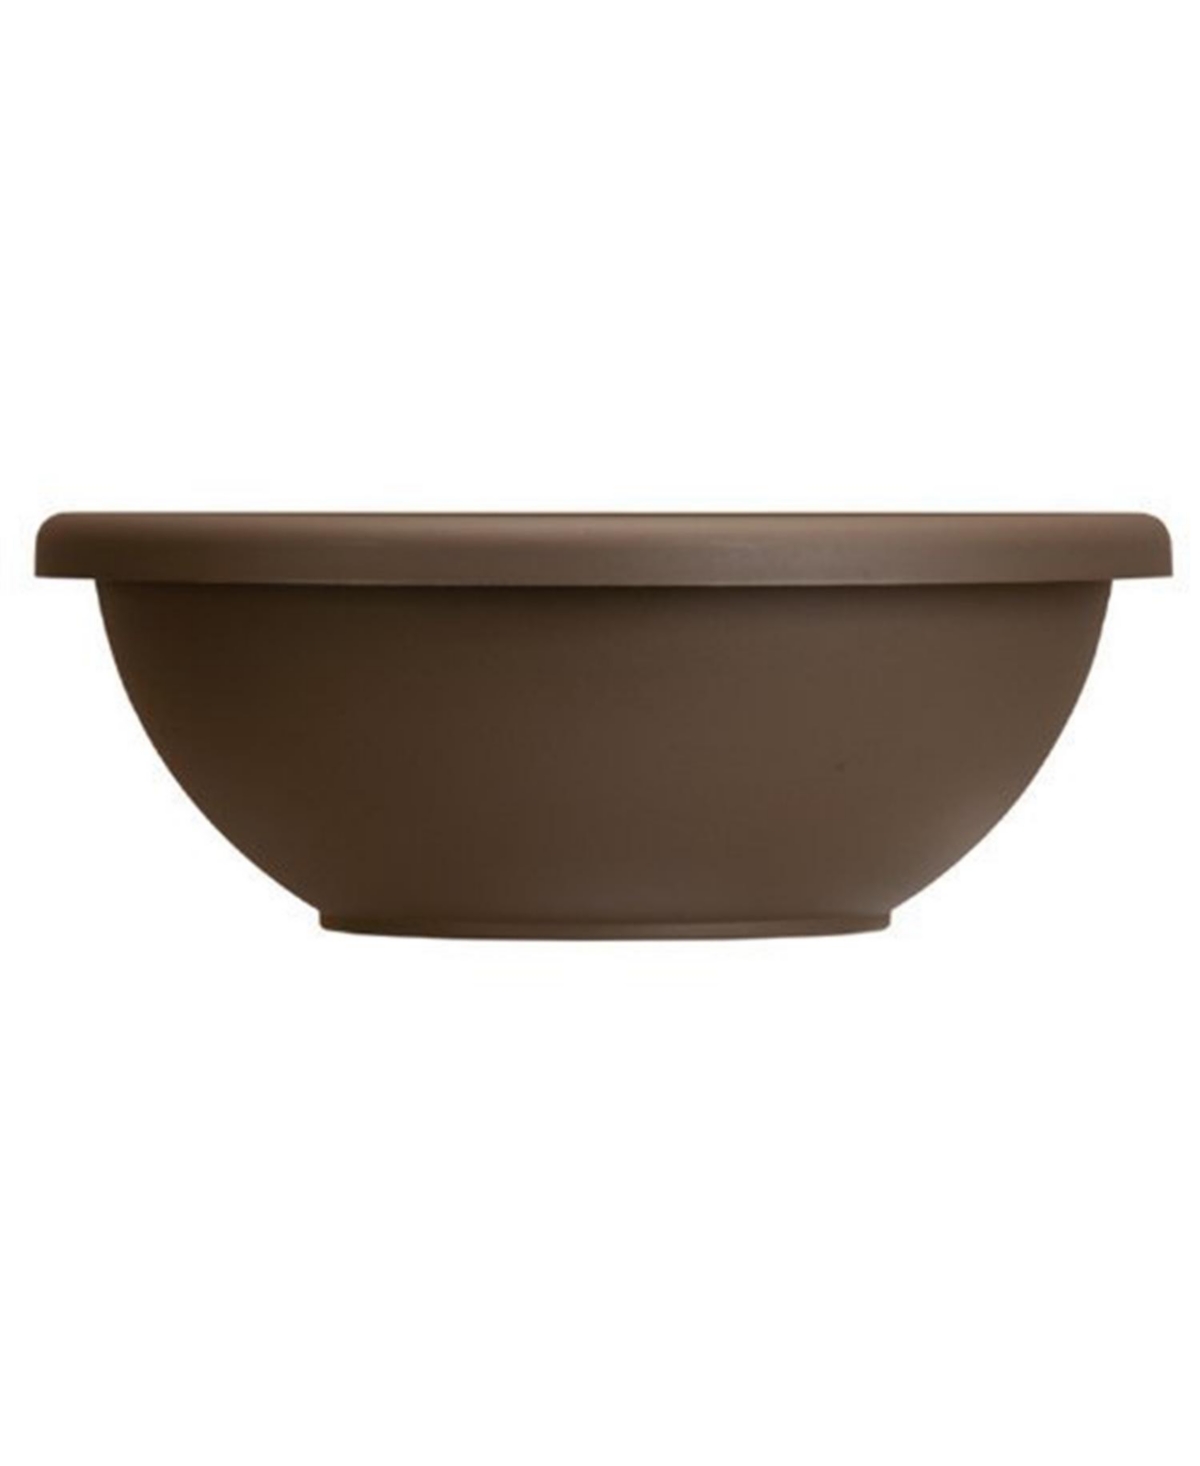 Akro Mills Garden Bowl, Chocolate, 12-Inch GAB12000E21